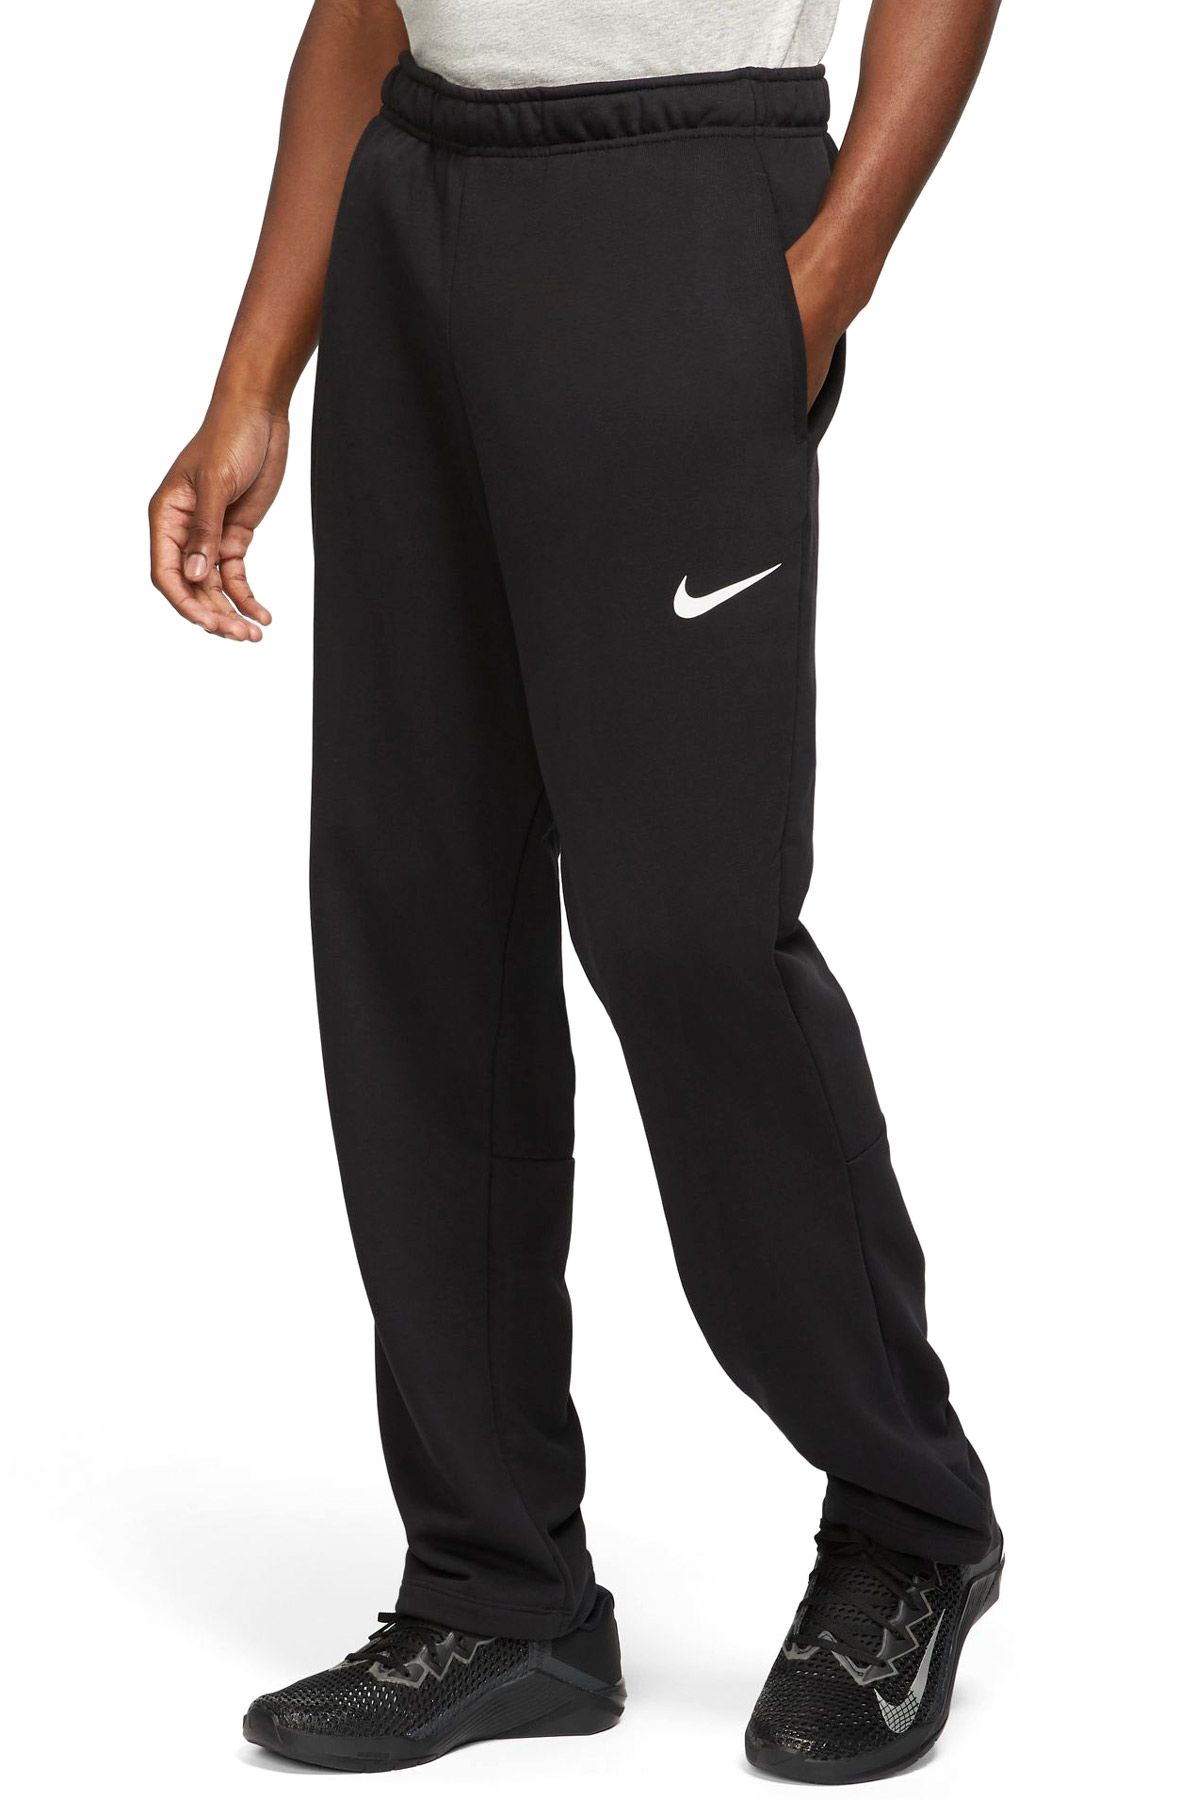  Nike Men's Therma Training Pants (Small, Black/MTLC